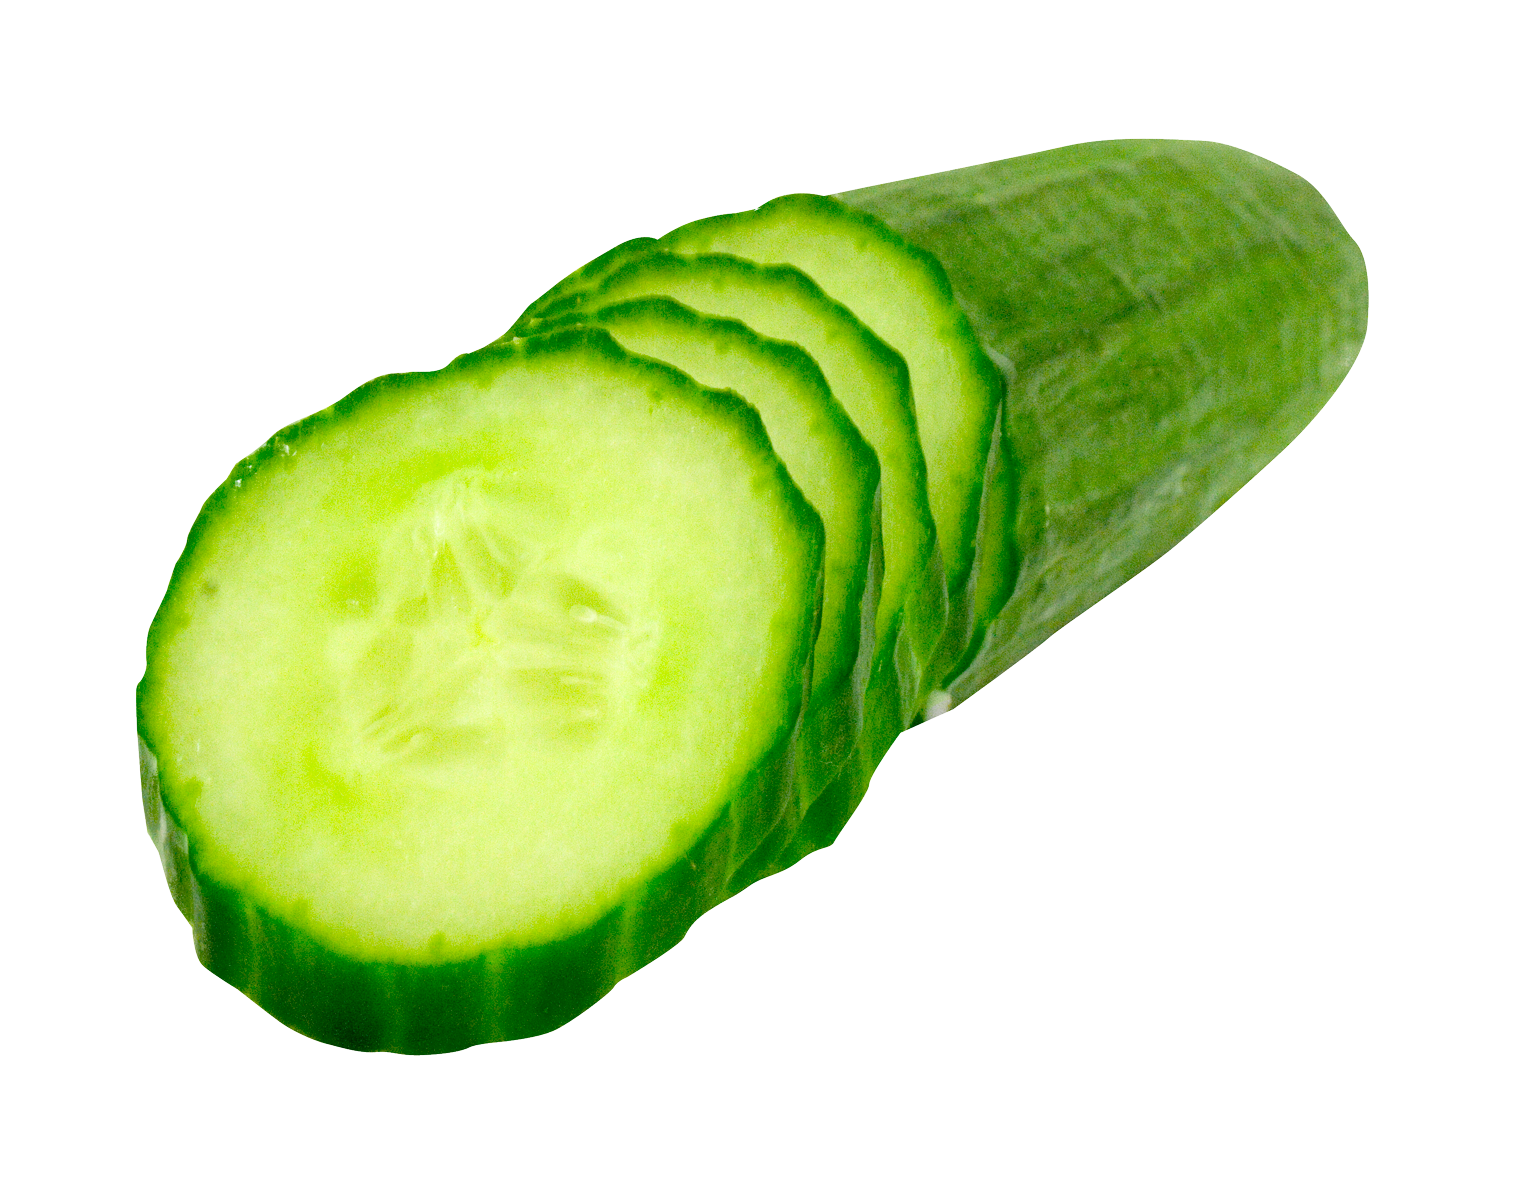 Cucumber slice PNG Image